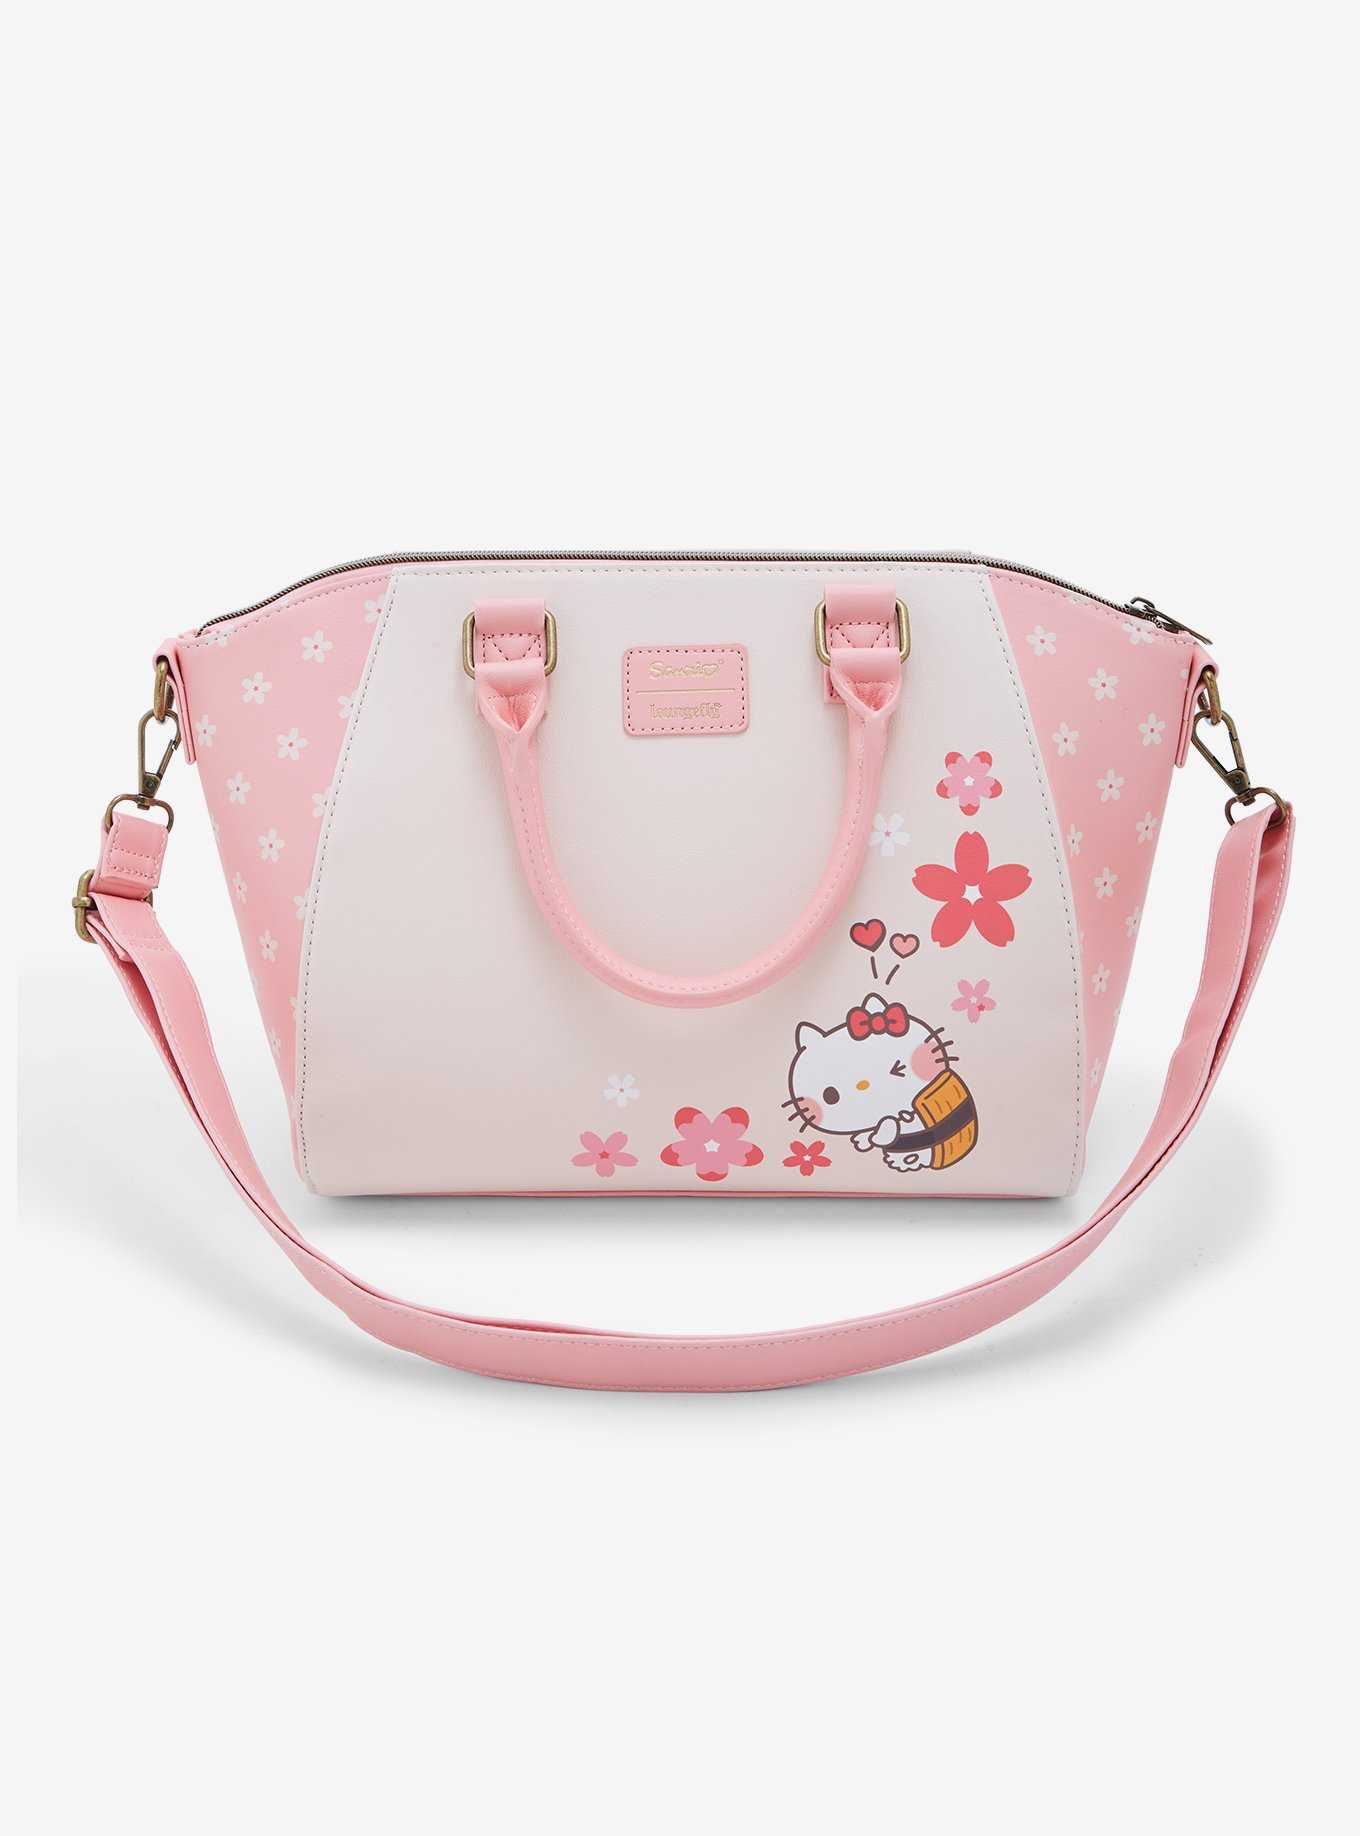 Loungefly Hello Kitty Sushi Satchel Bag, , hi-res